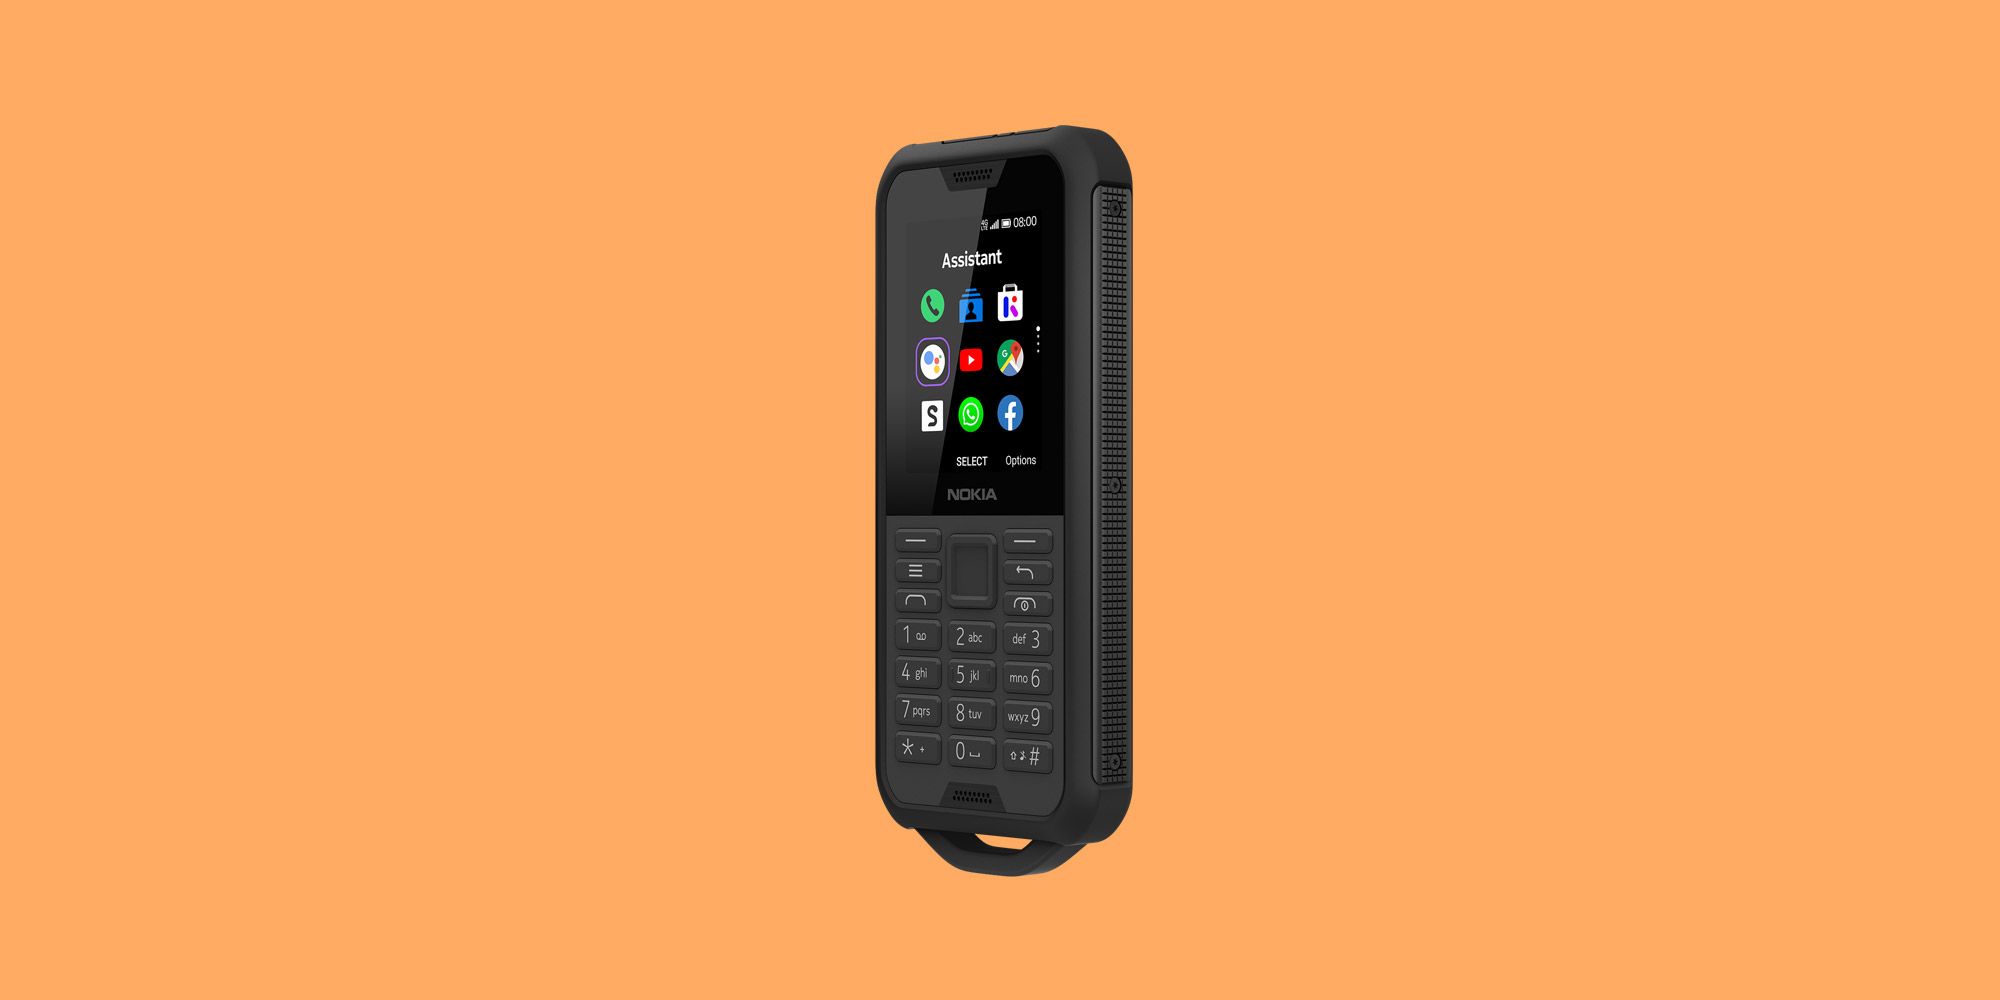 Nokia 800 Tough Unlocked Phone Black - Officeworks